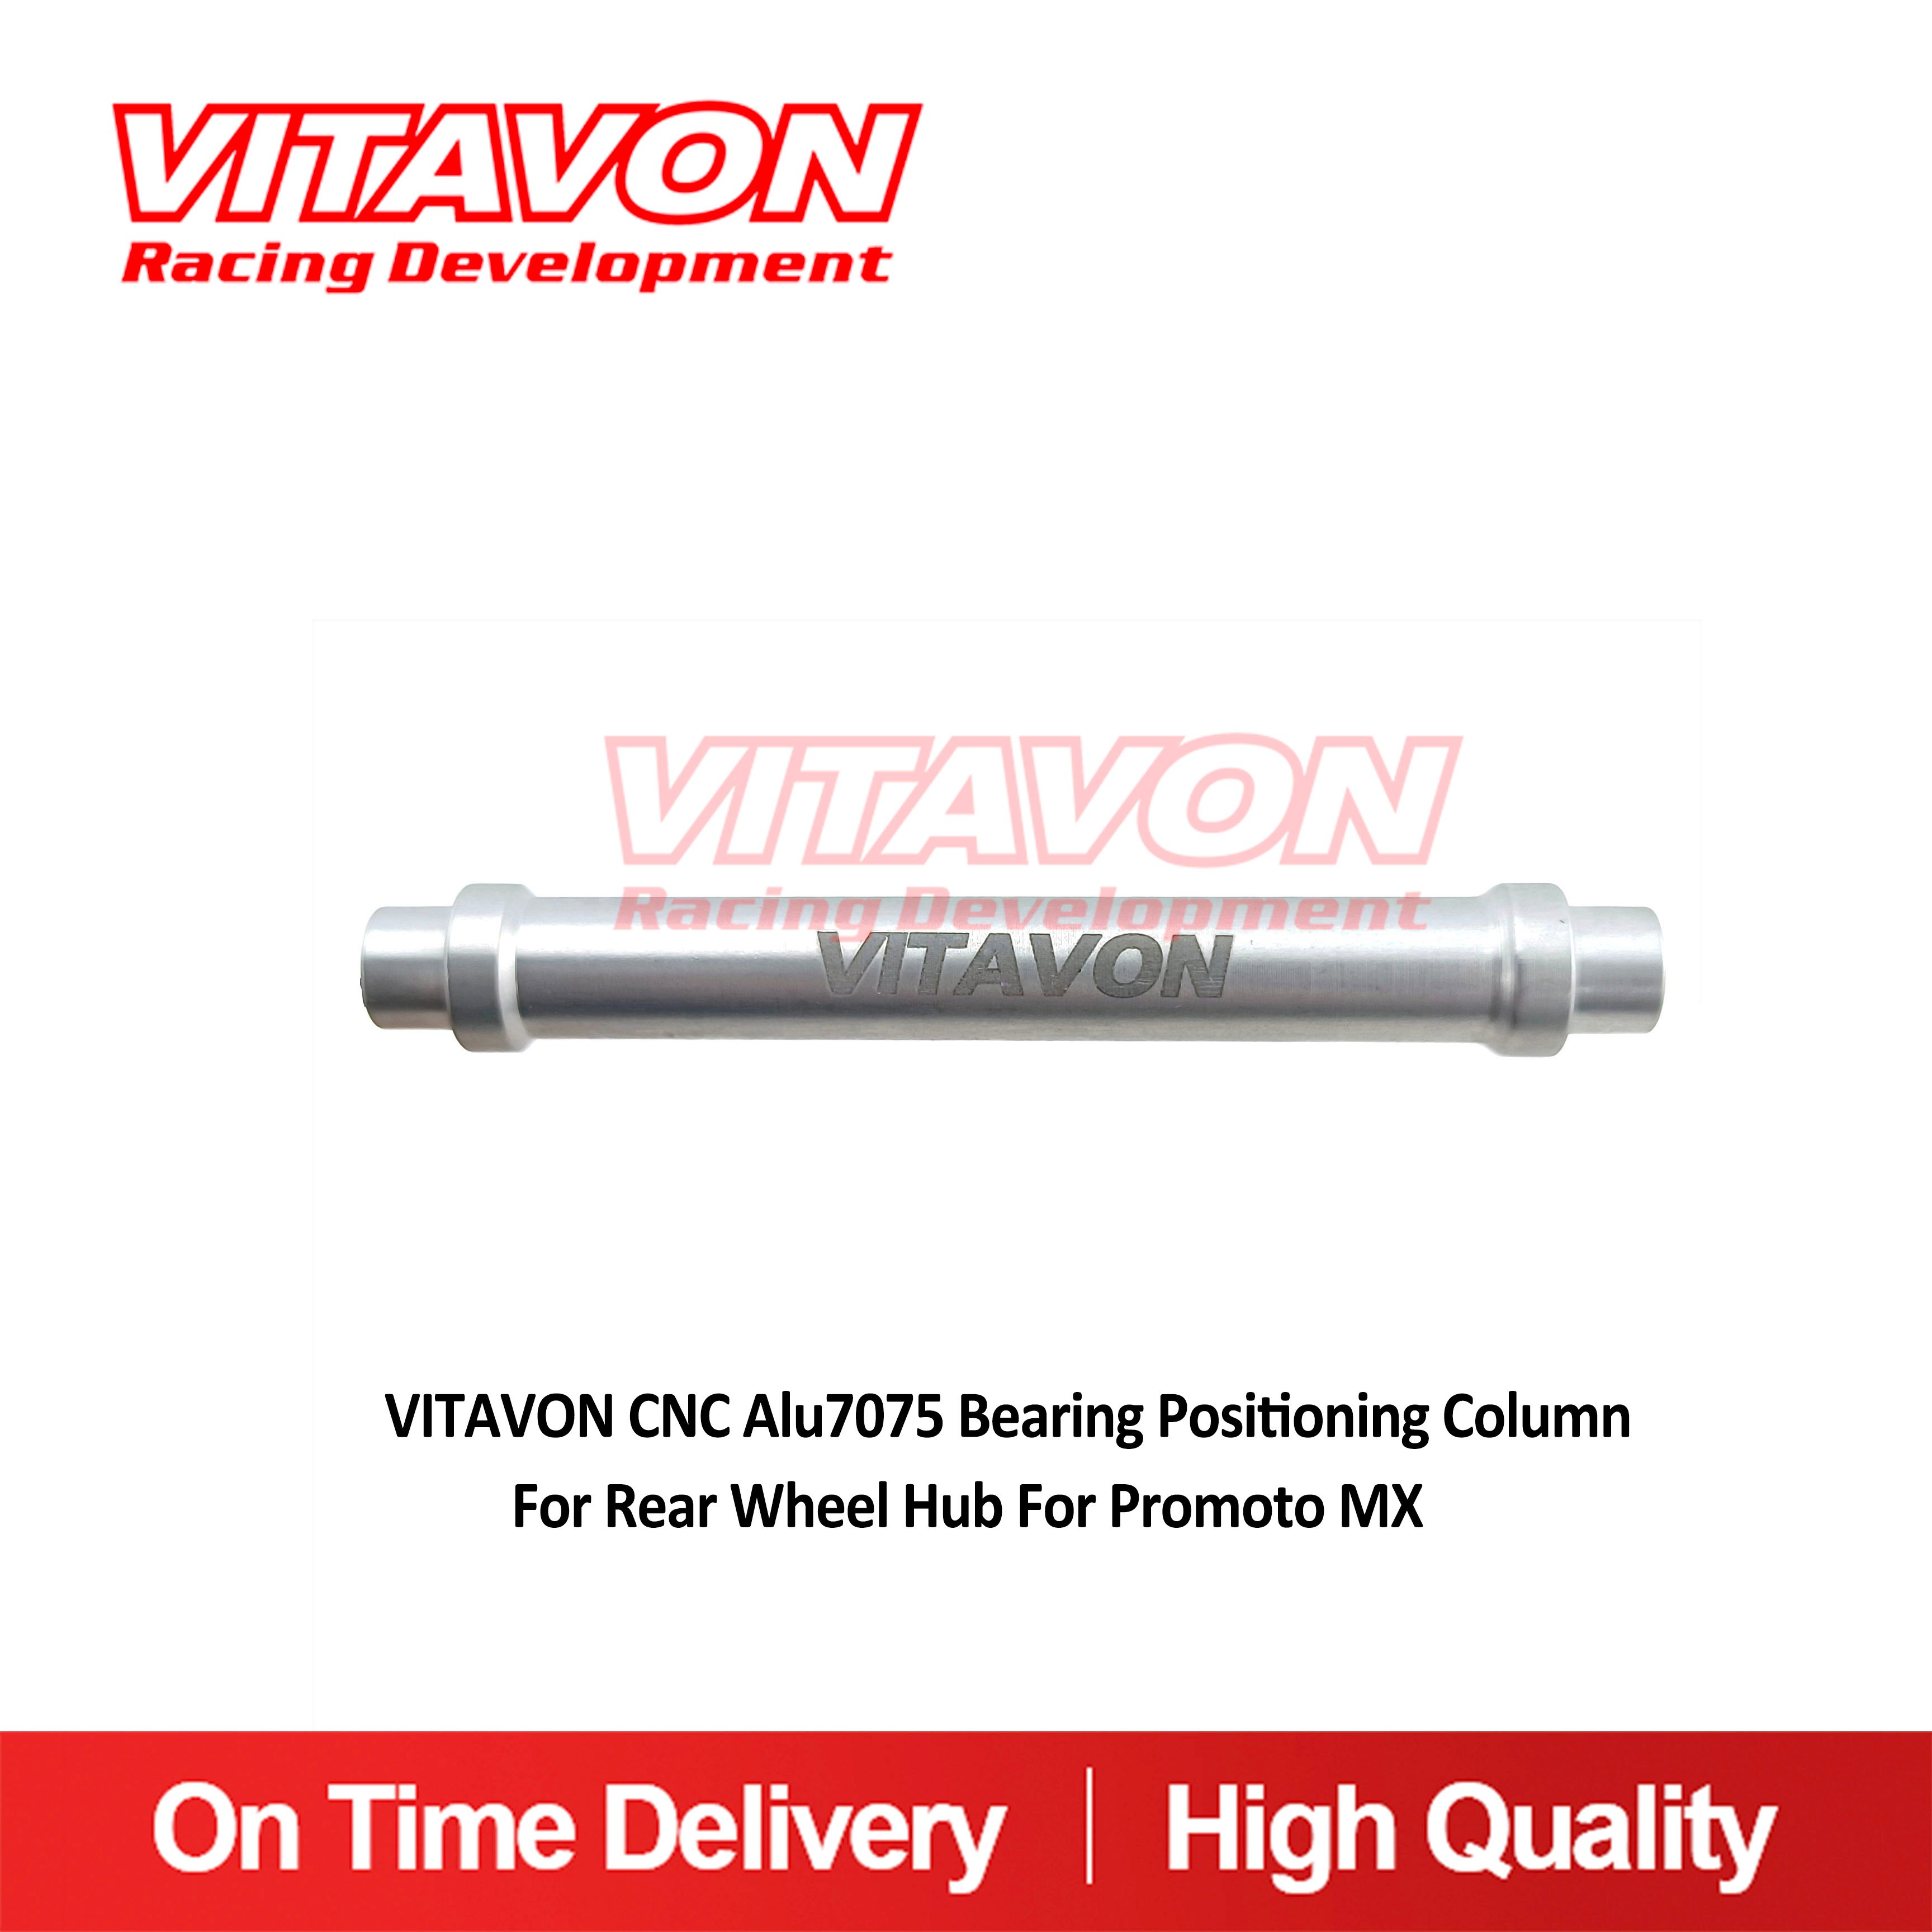 VITAVON CNC Alu7075 Bearing Positioning Column For Rear Wheel Hub For Promoto MX